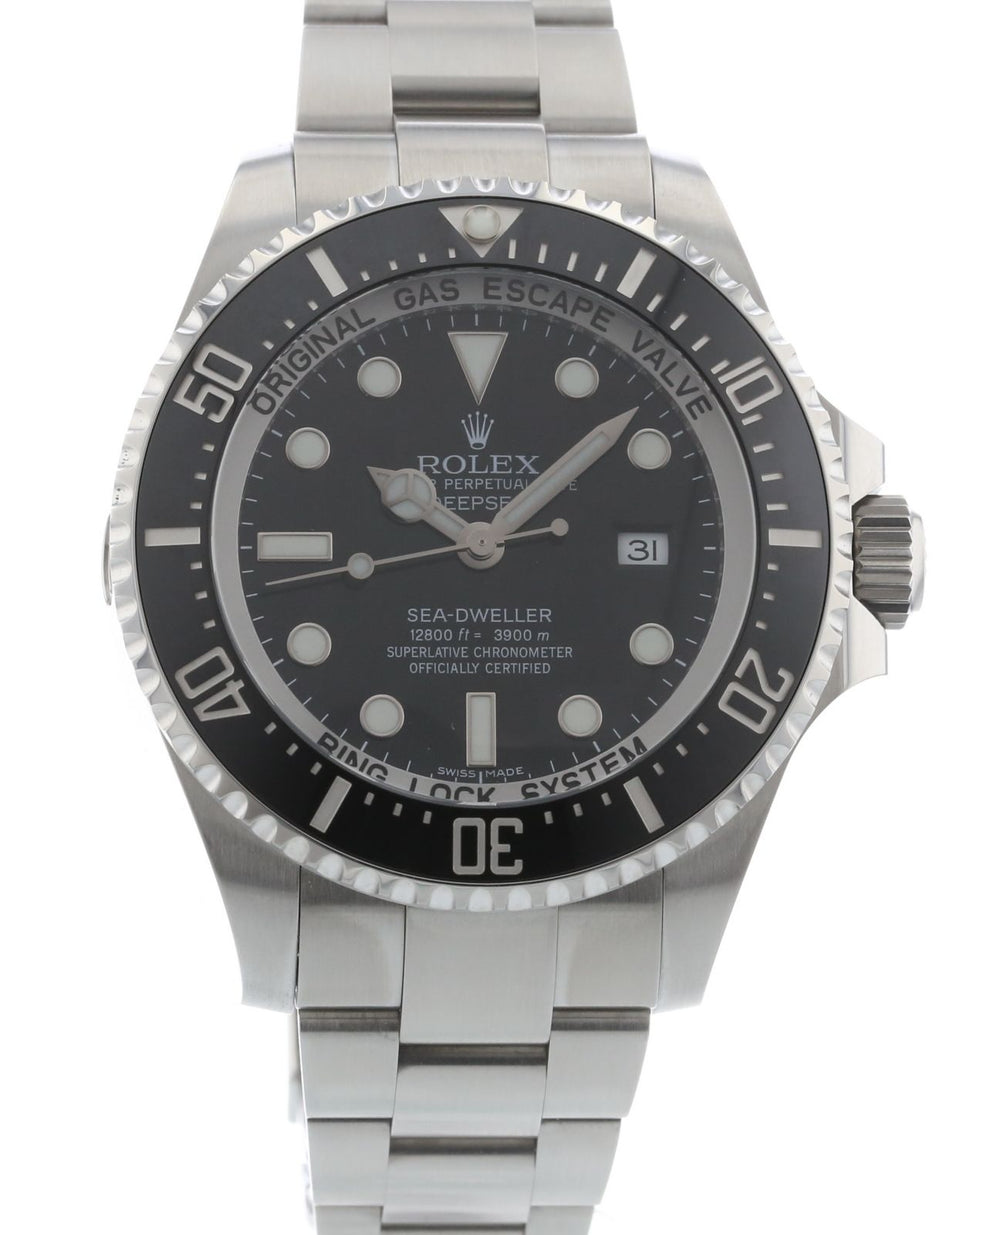 Rolex Sea-Dweller 116660 1